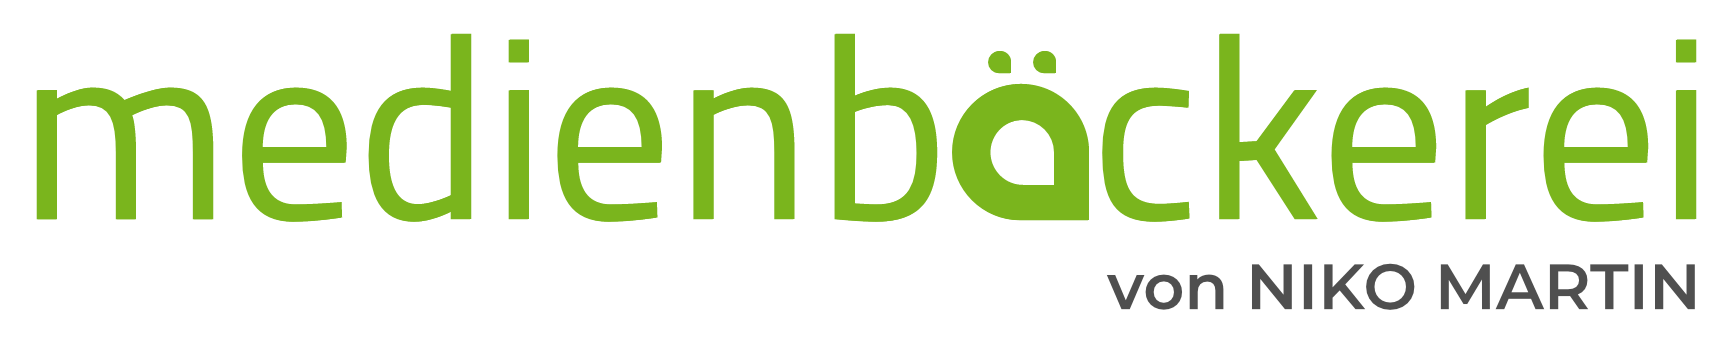 Medienbäckerei von Niko Martin (Logo)